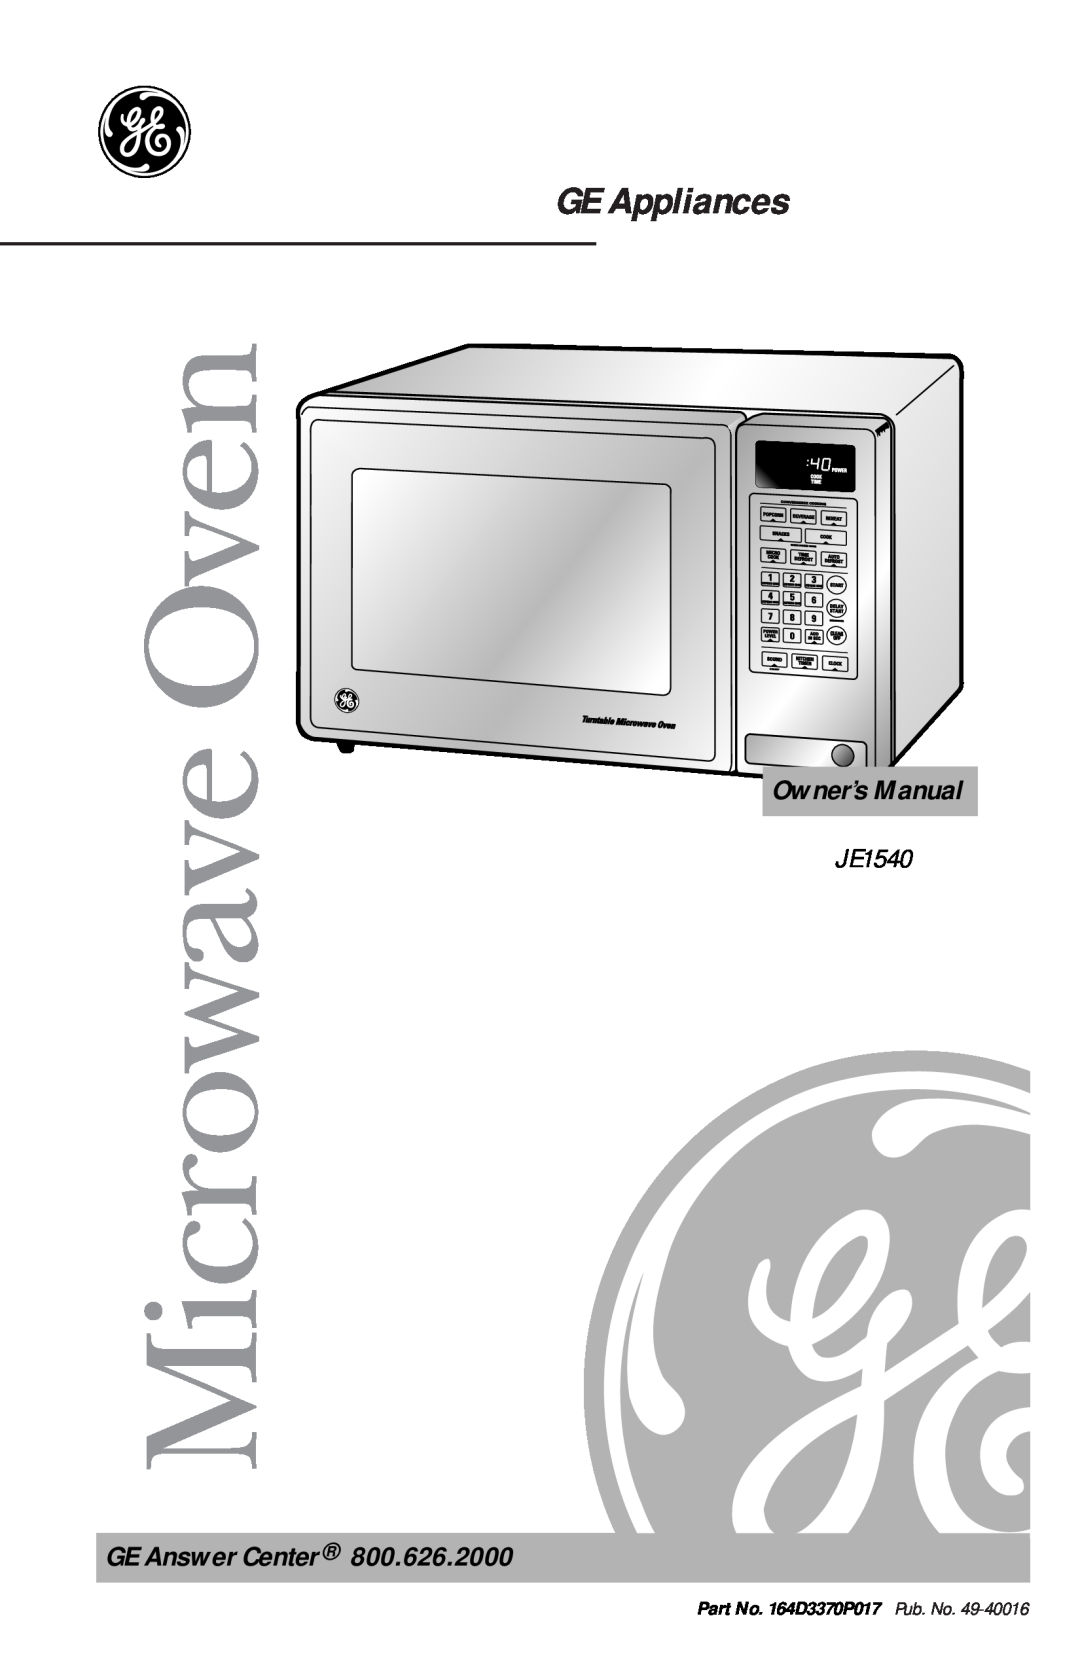 GE je1540 owner manual GE Appliances, GE Answer Center, Microwave Oven, Part No. 164D3370P017 Pub. No 